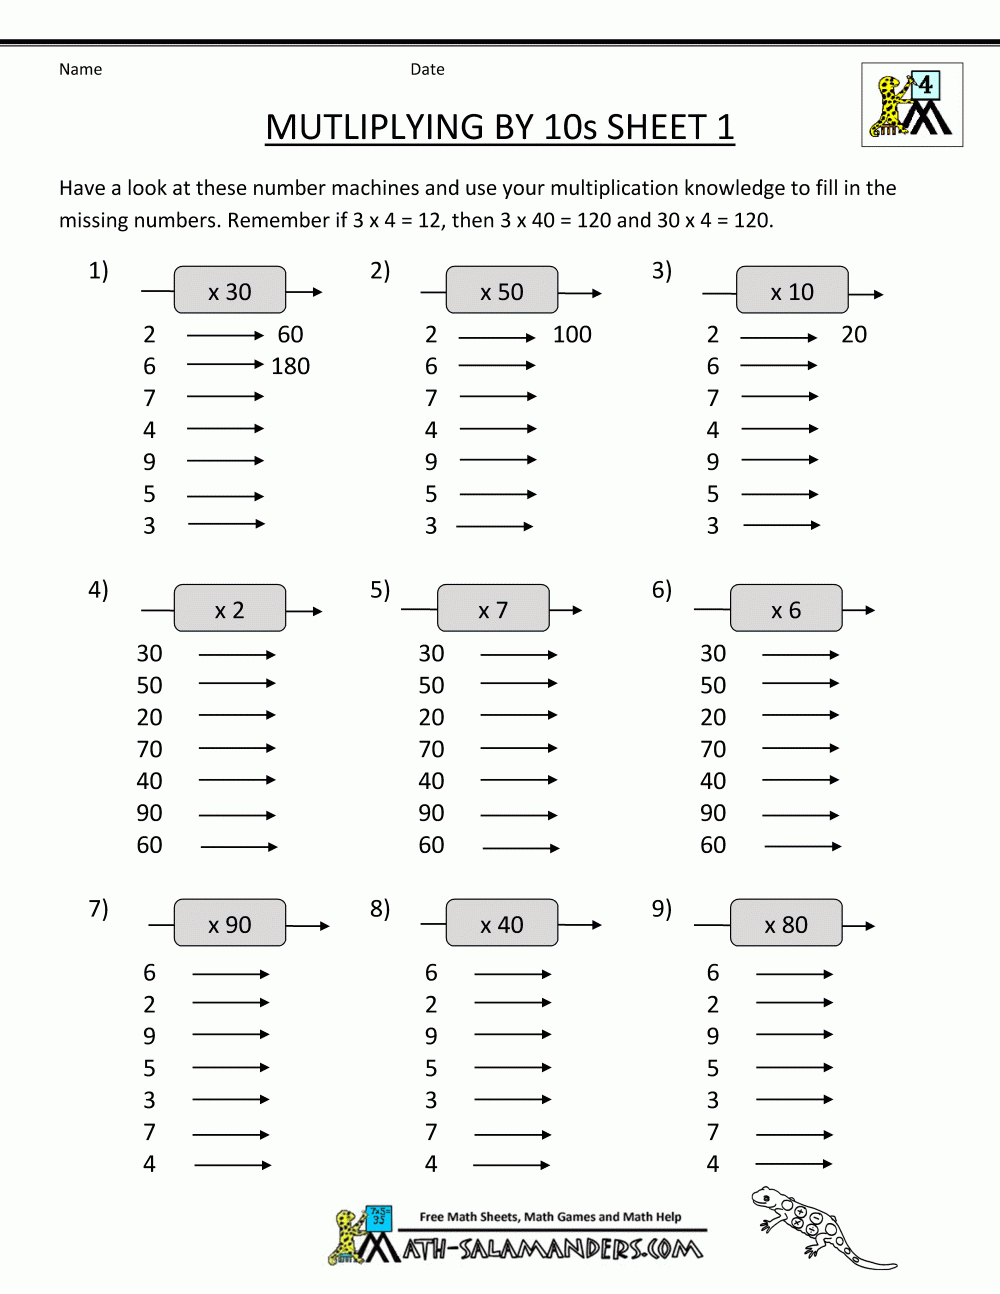 Multiplication Fact Sheets - Free Printable Multiplication Fact Sheets